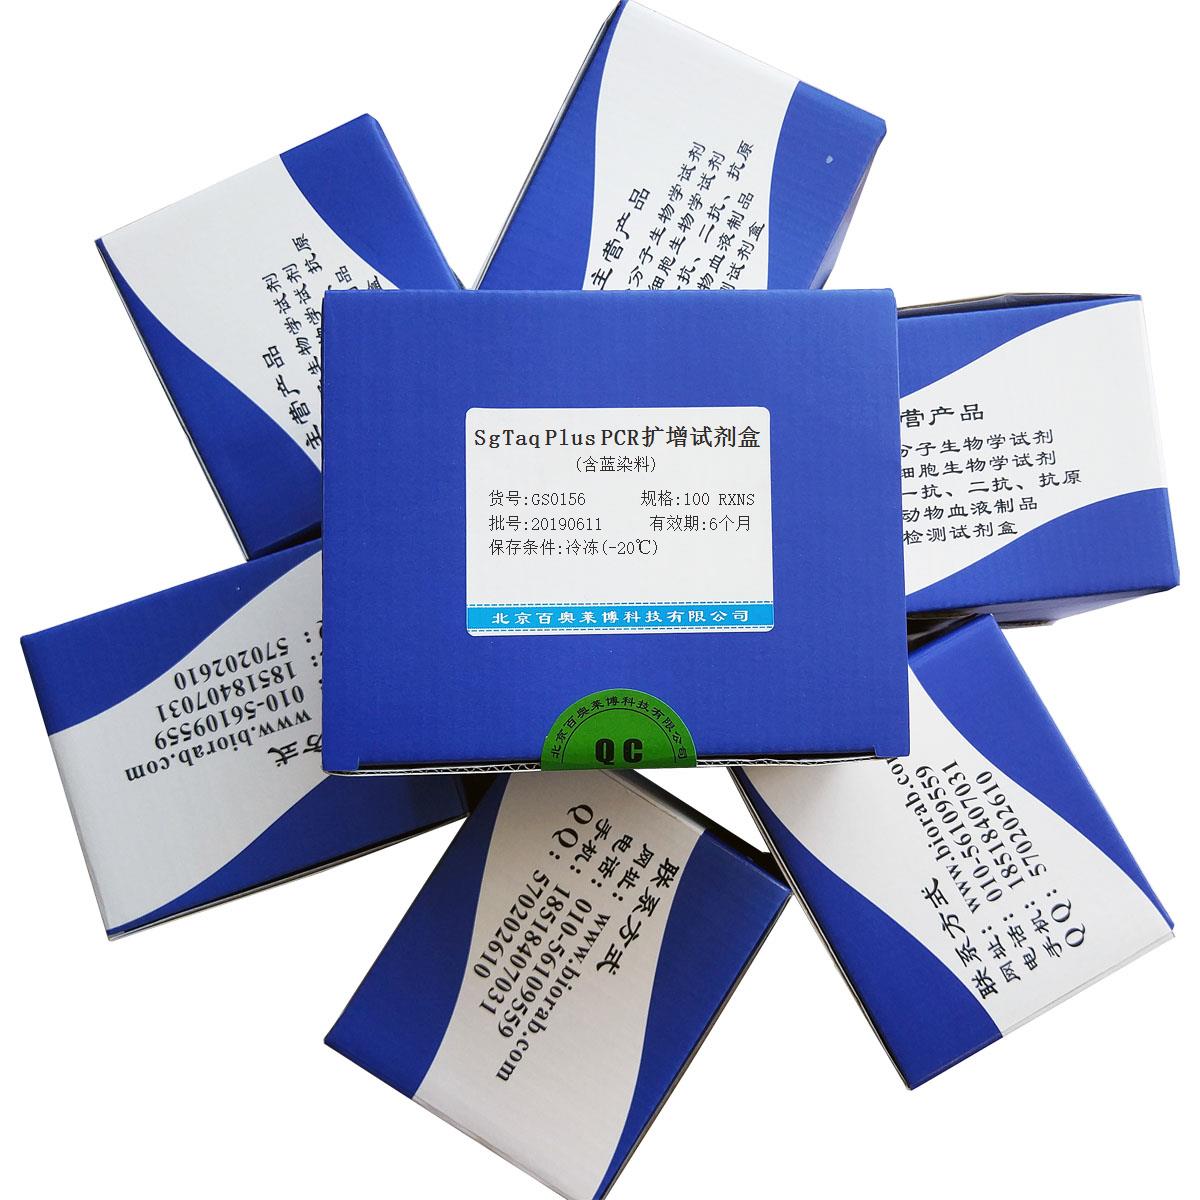 SgTaq Plus PCR扩增试剂盒(含蓝染料)